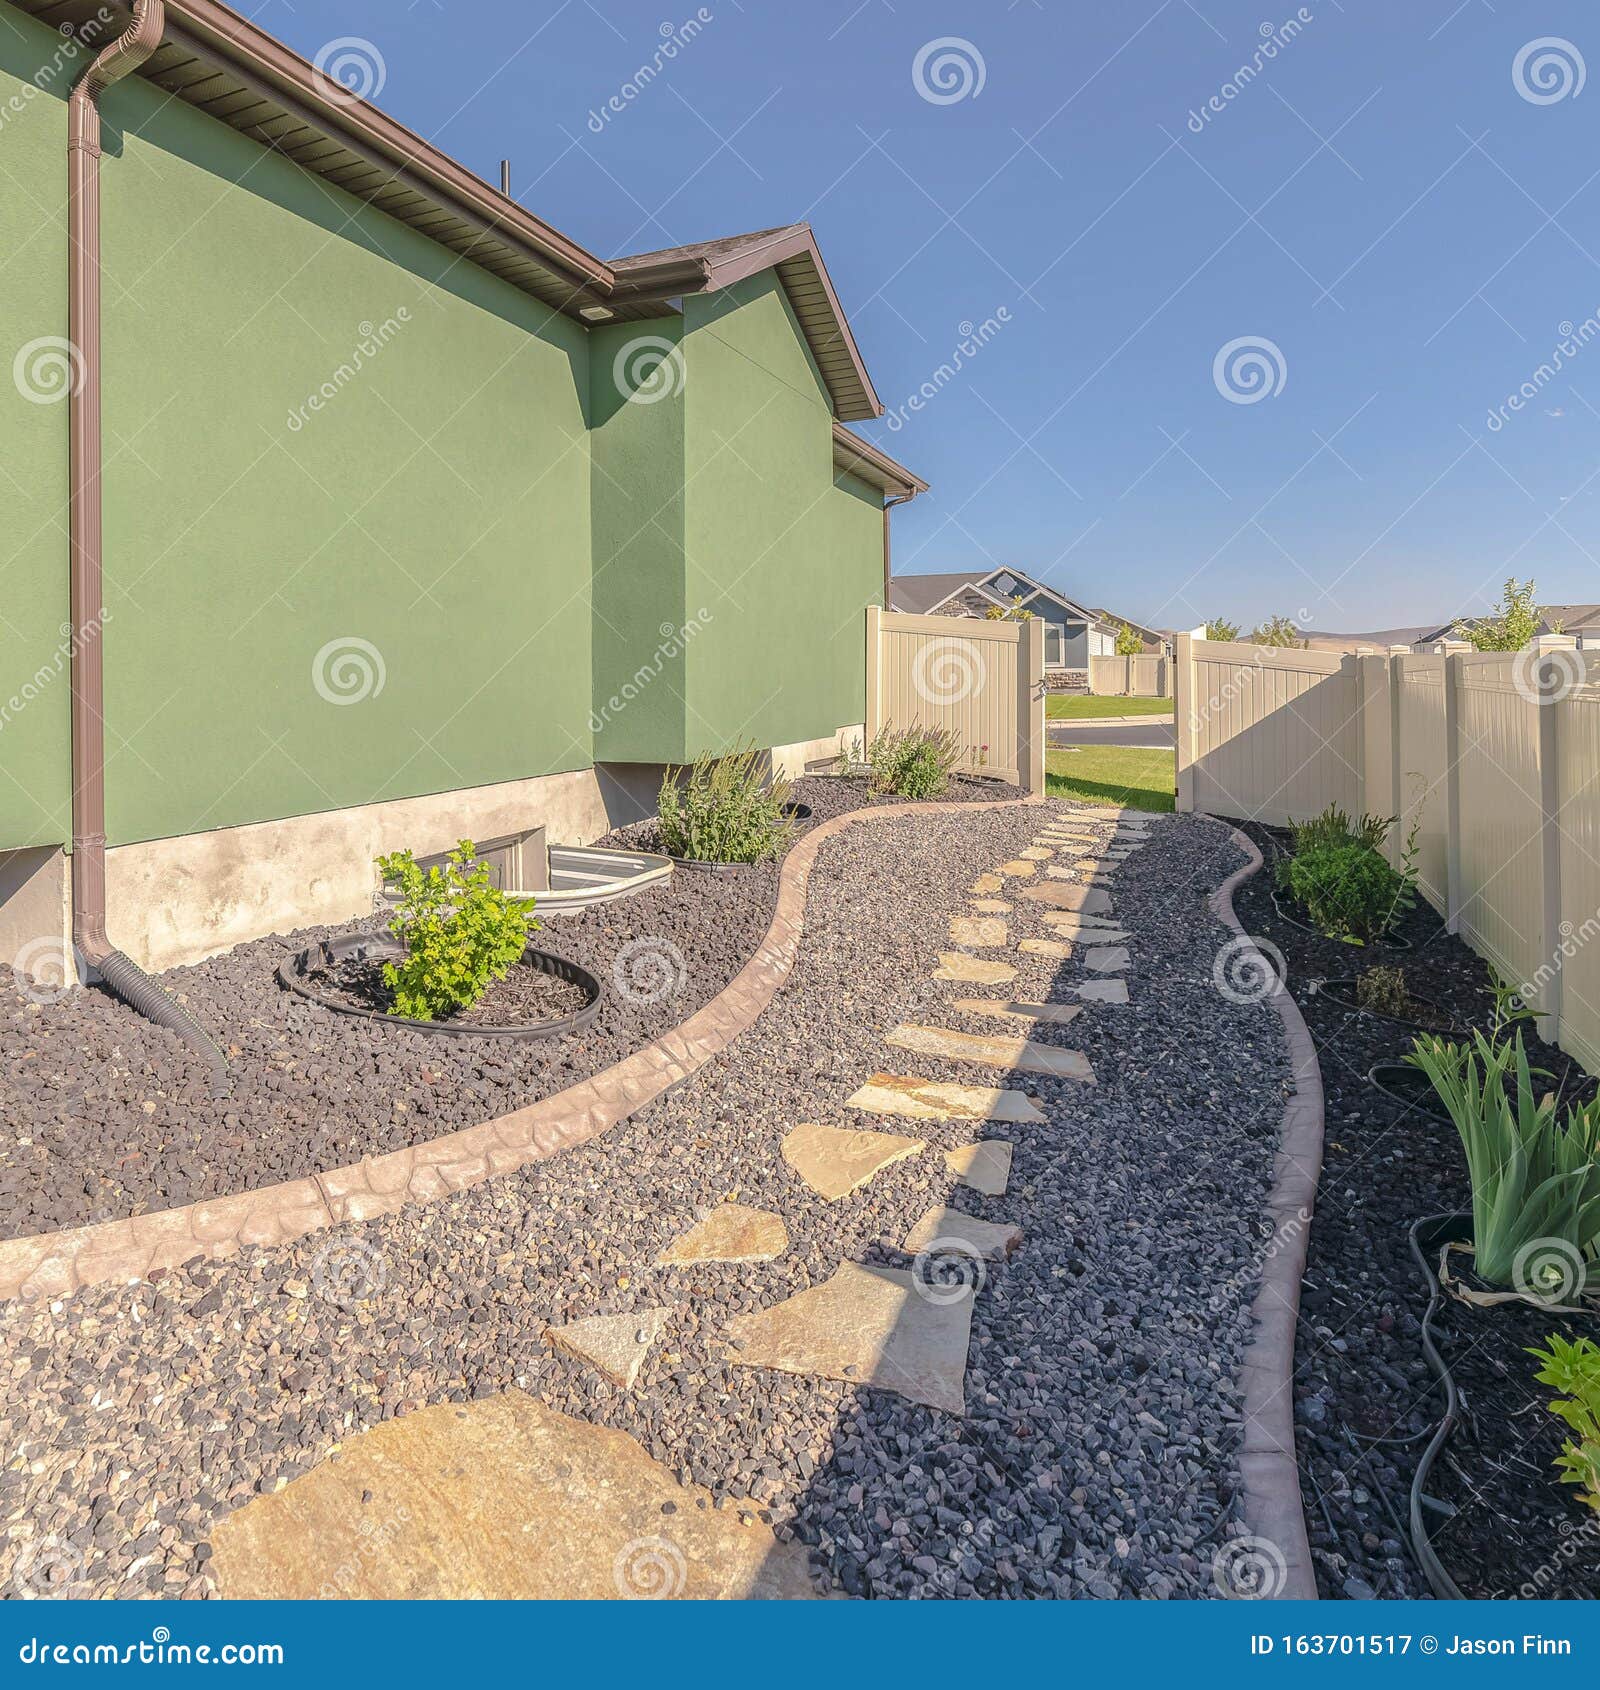 Square Landscaped Garden Pathways In Suburban Backyard Day Stock Image Image Of Botanical Square 163701517